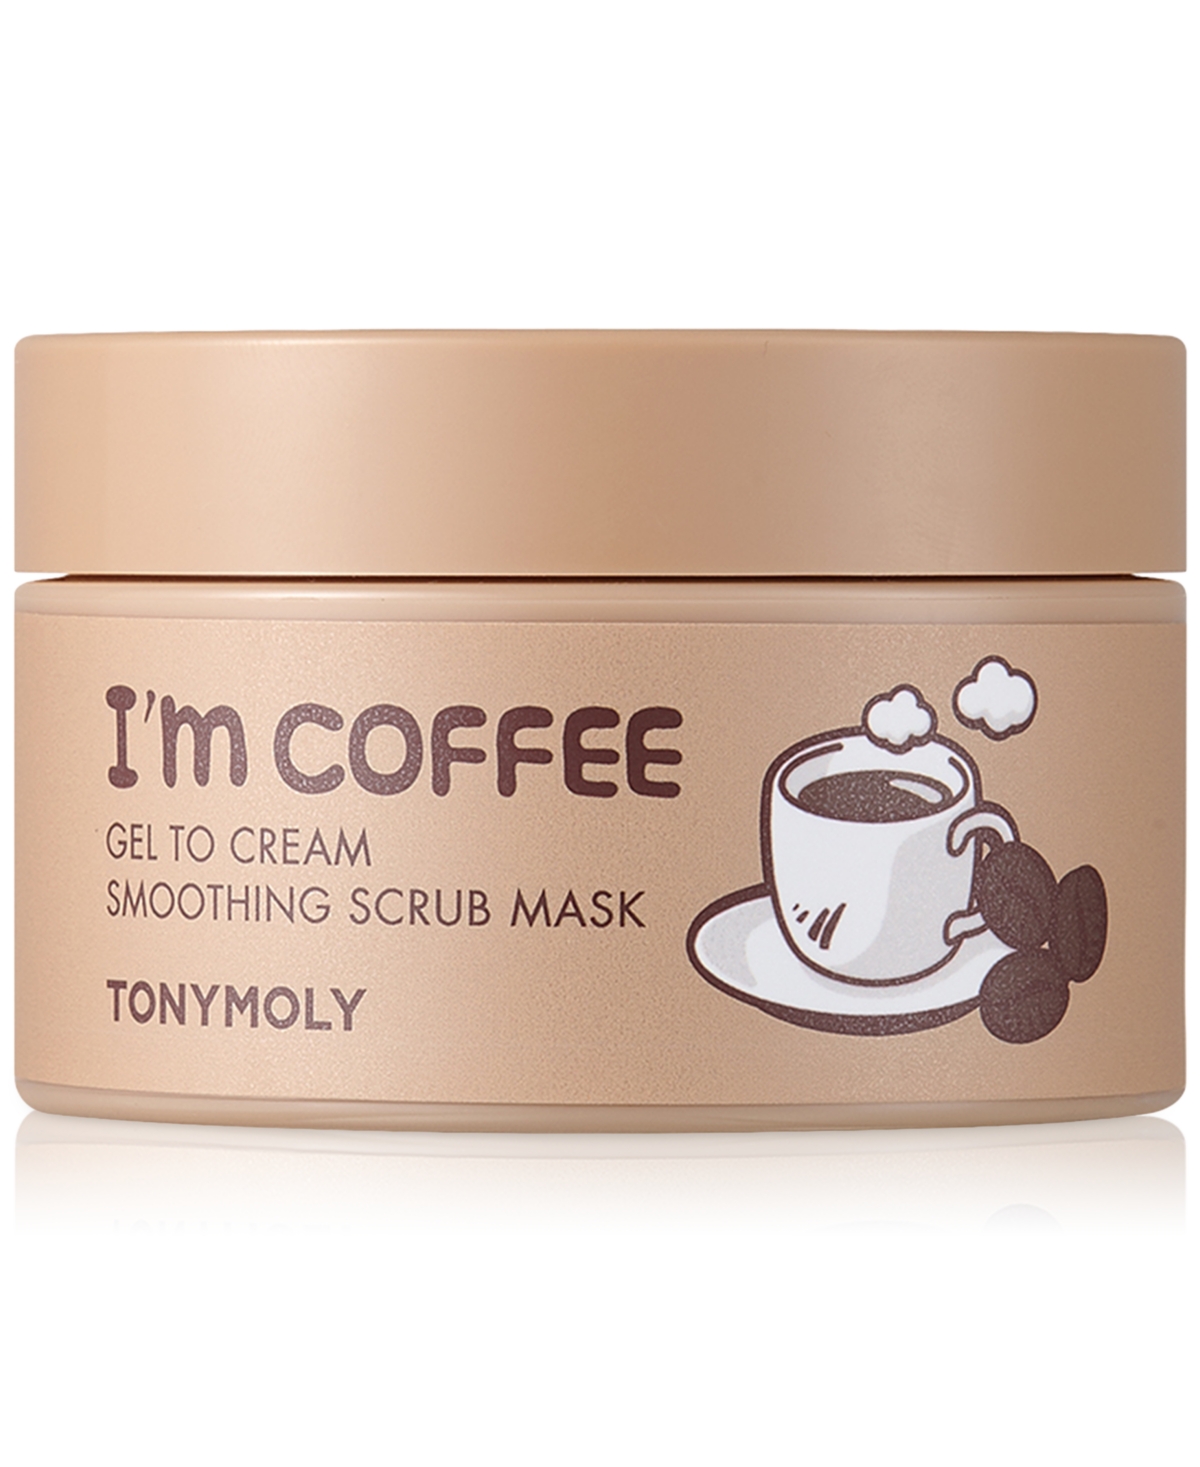 I'm Coffee Gel To Cream Smoothing Scrub Mask